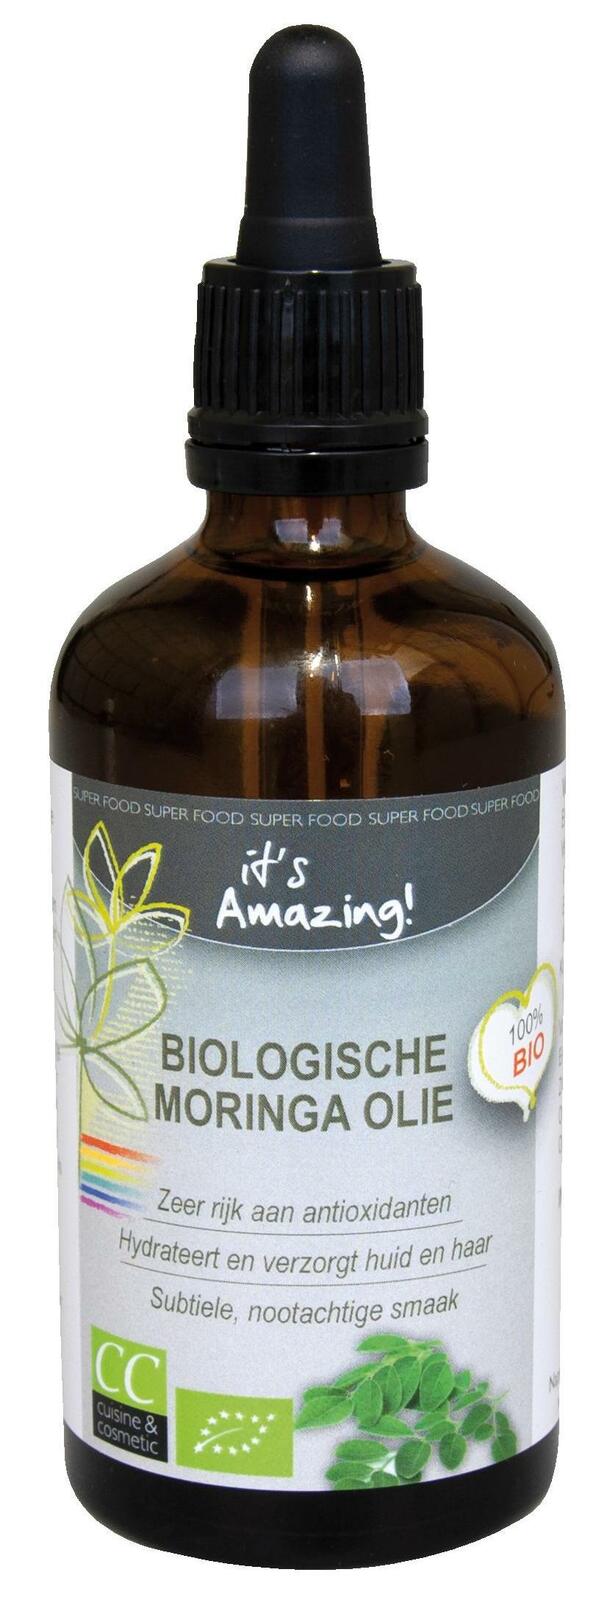 Its Amazing Biologische Moringa Olie